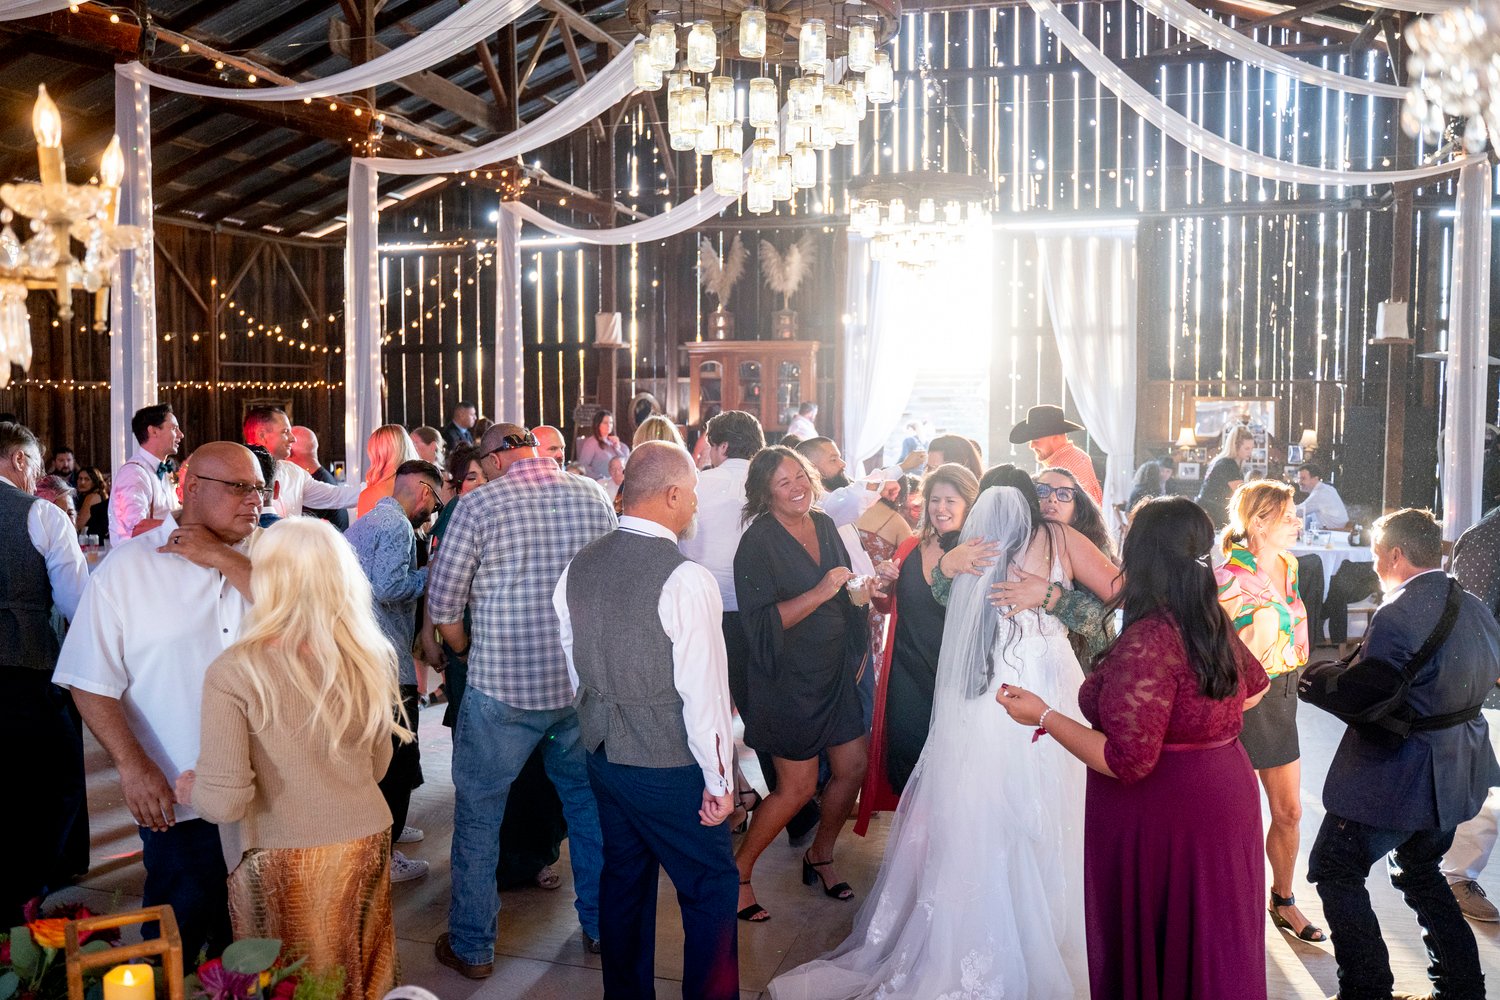 guests dancing at a wedding